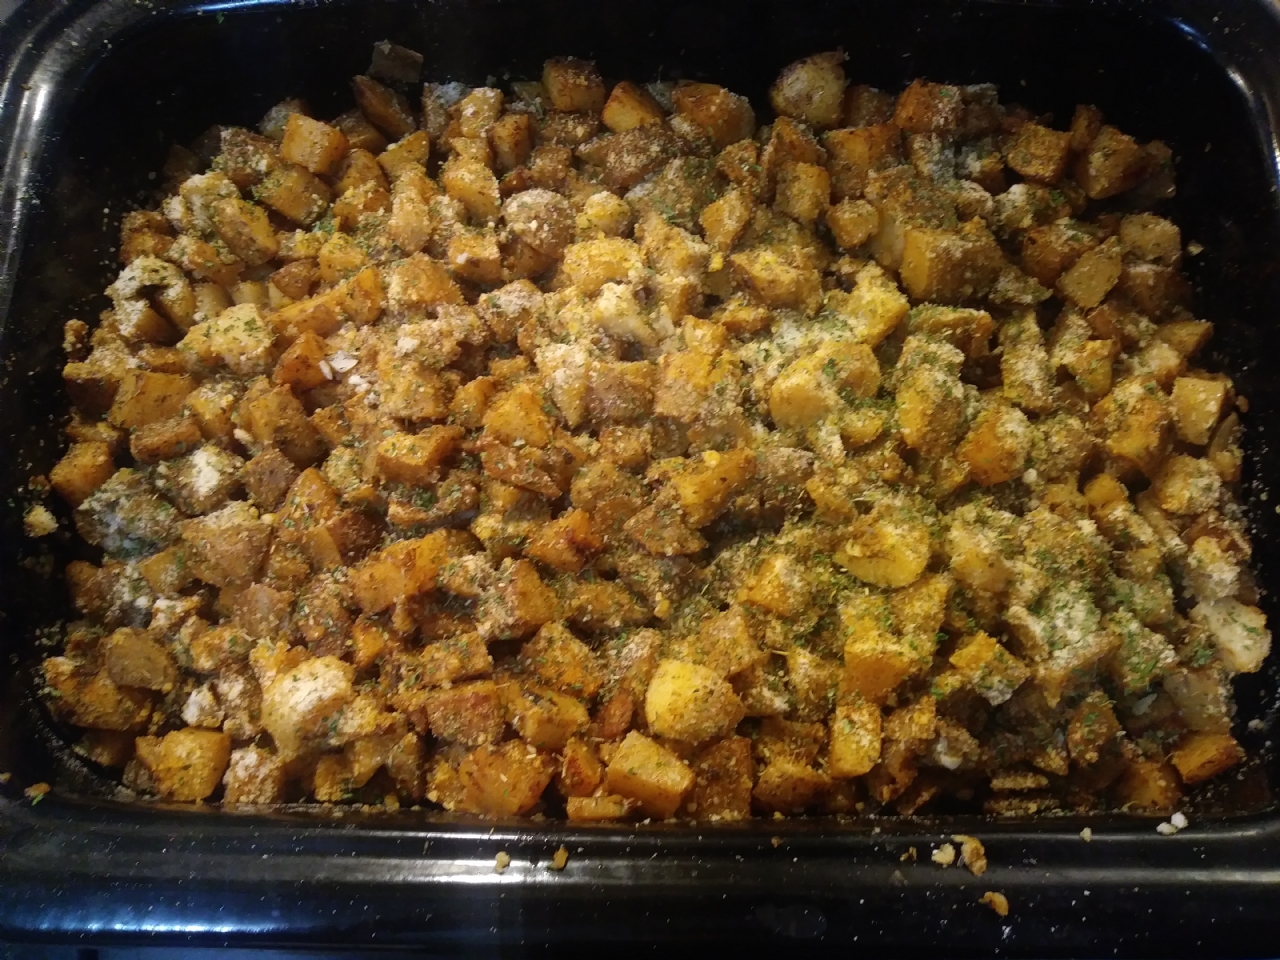 Parmesan-garlic oven roasted potatoes